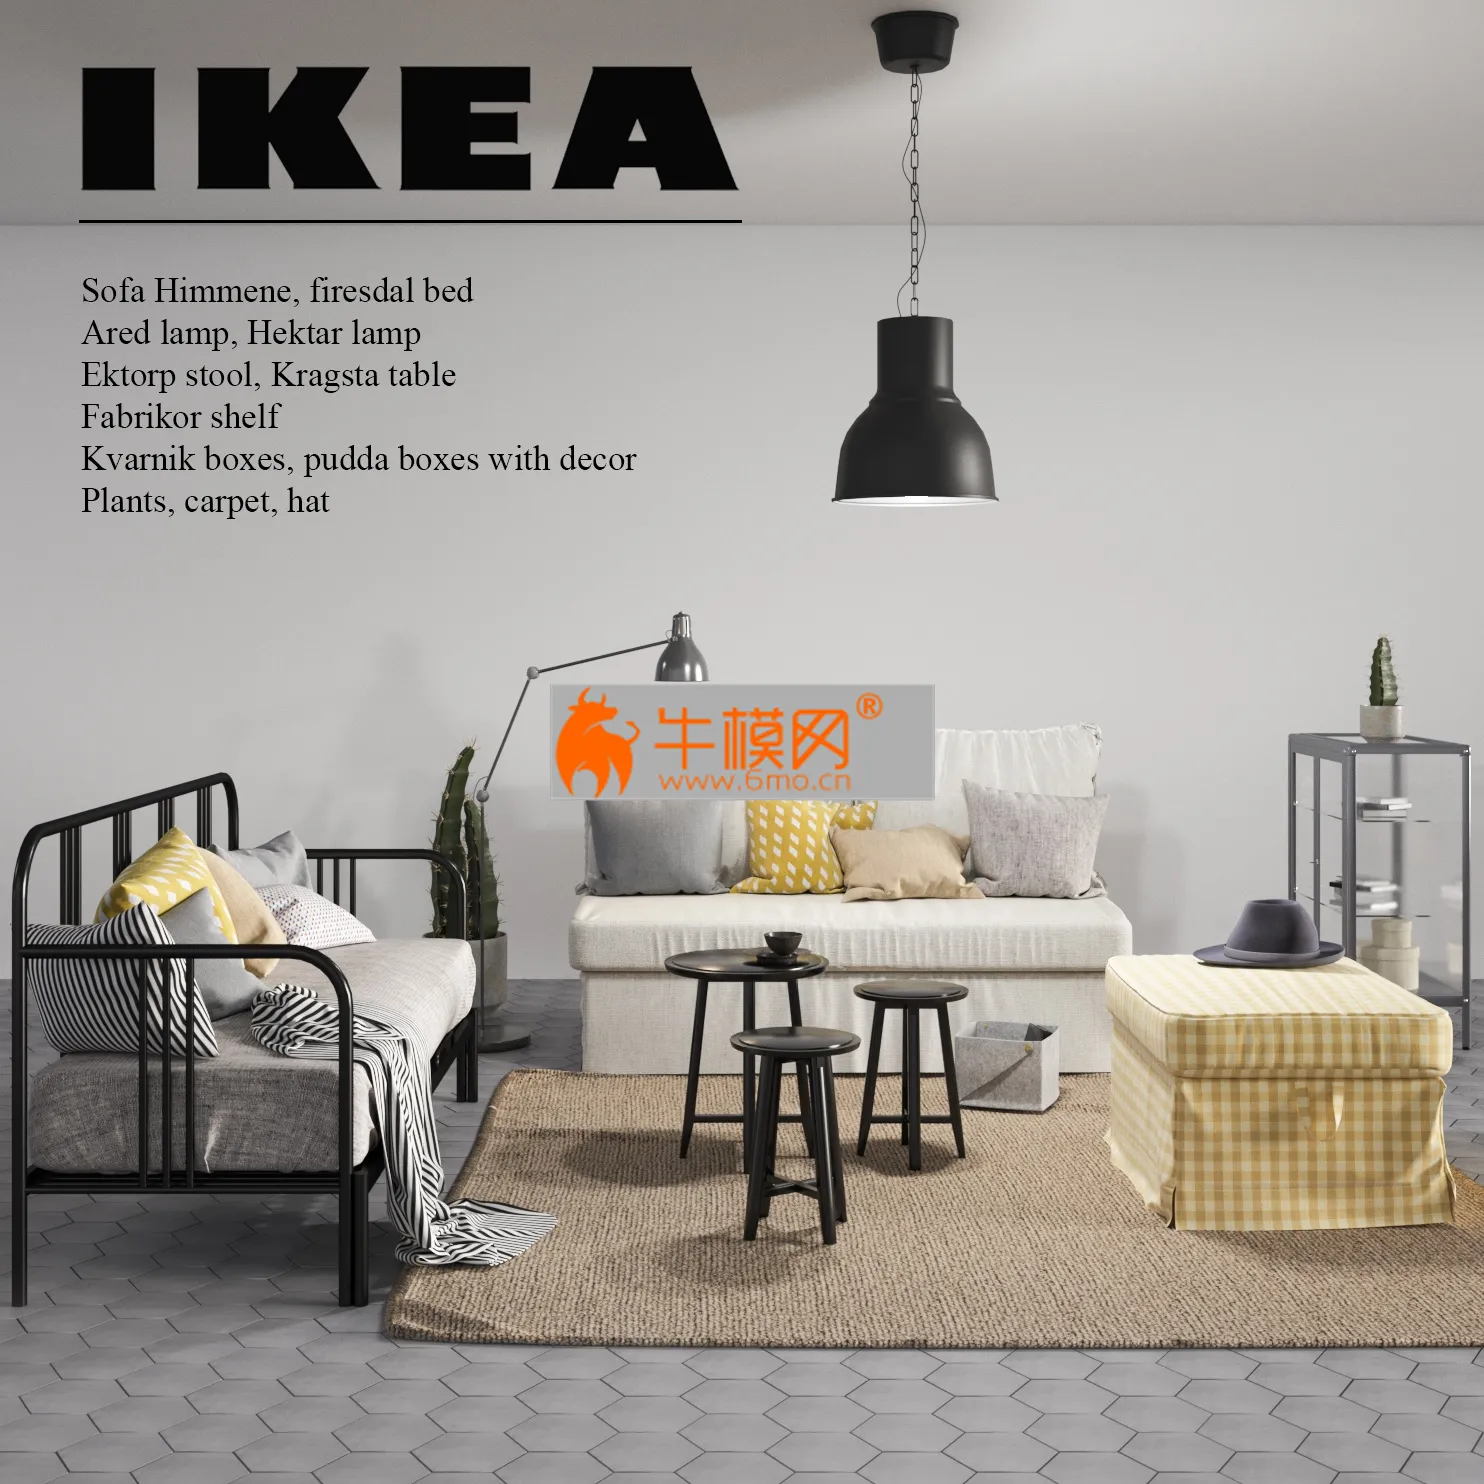 Ikea_Set_from_the_new_catalog_2017-2018 – 2015